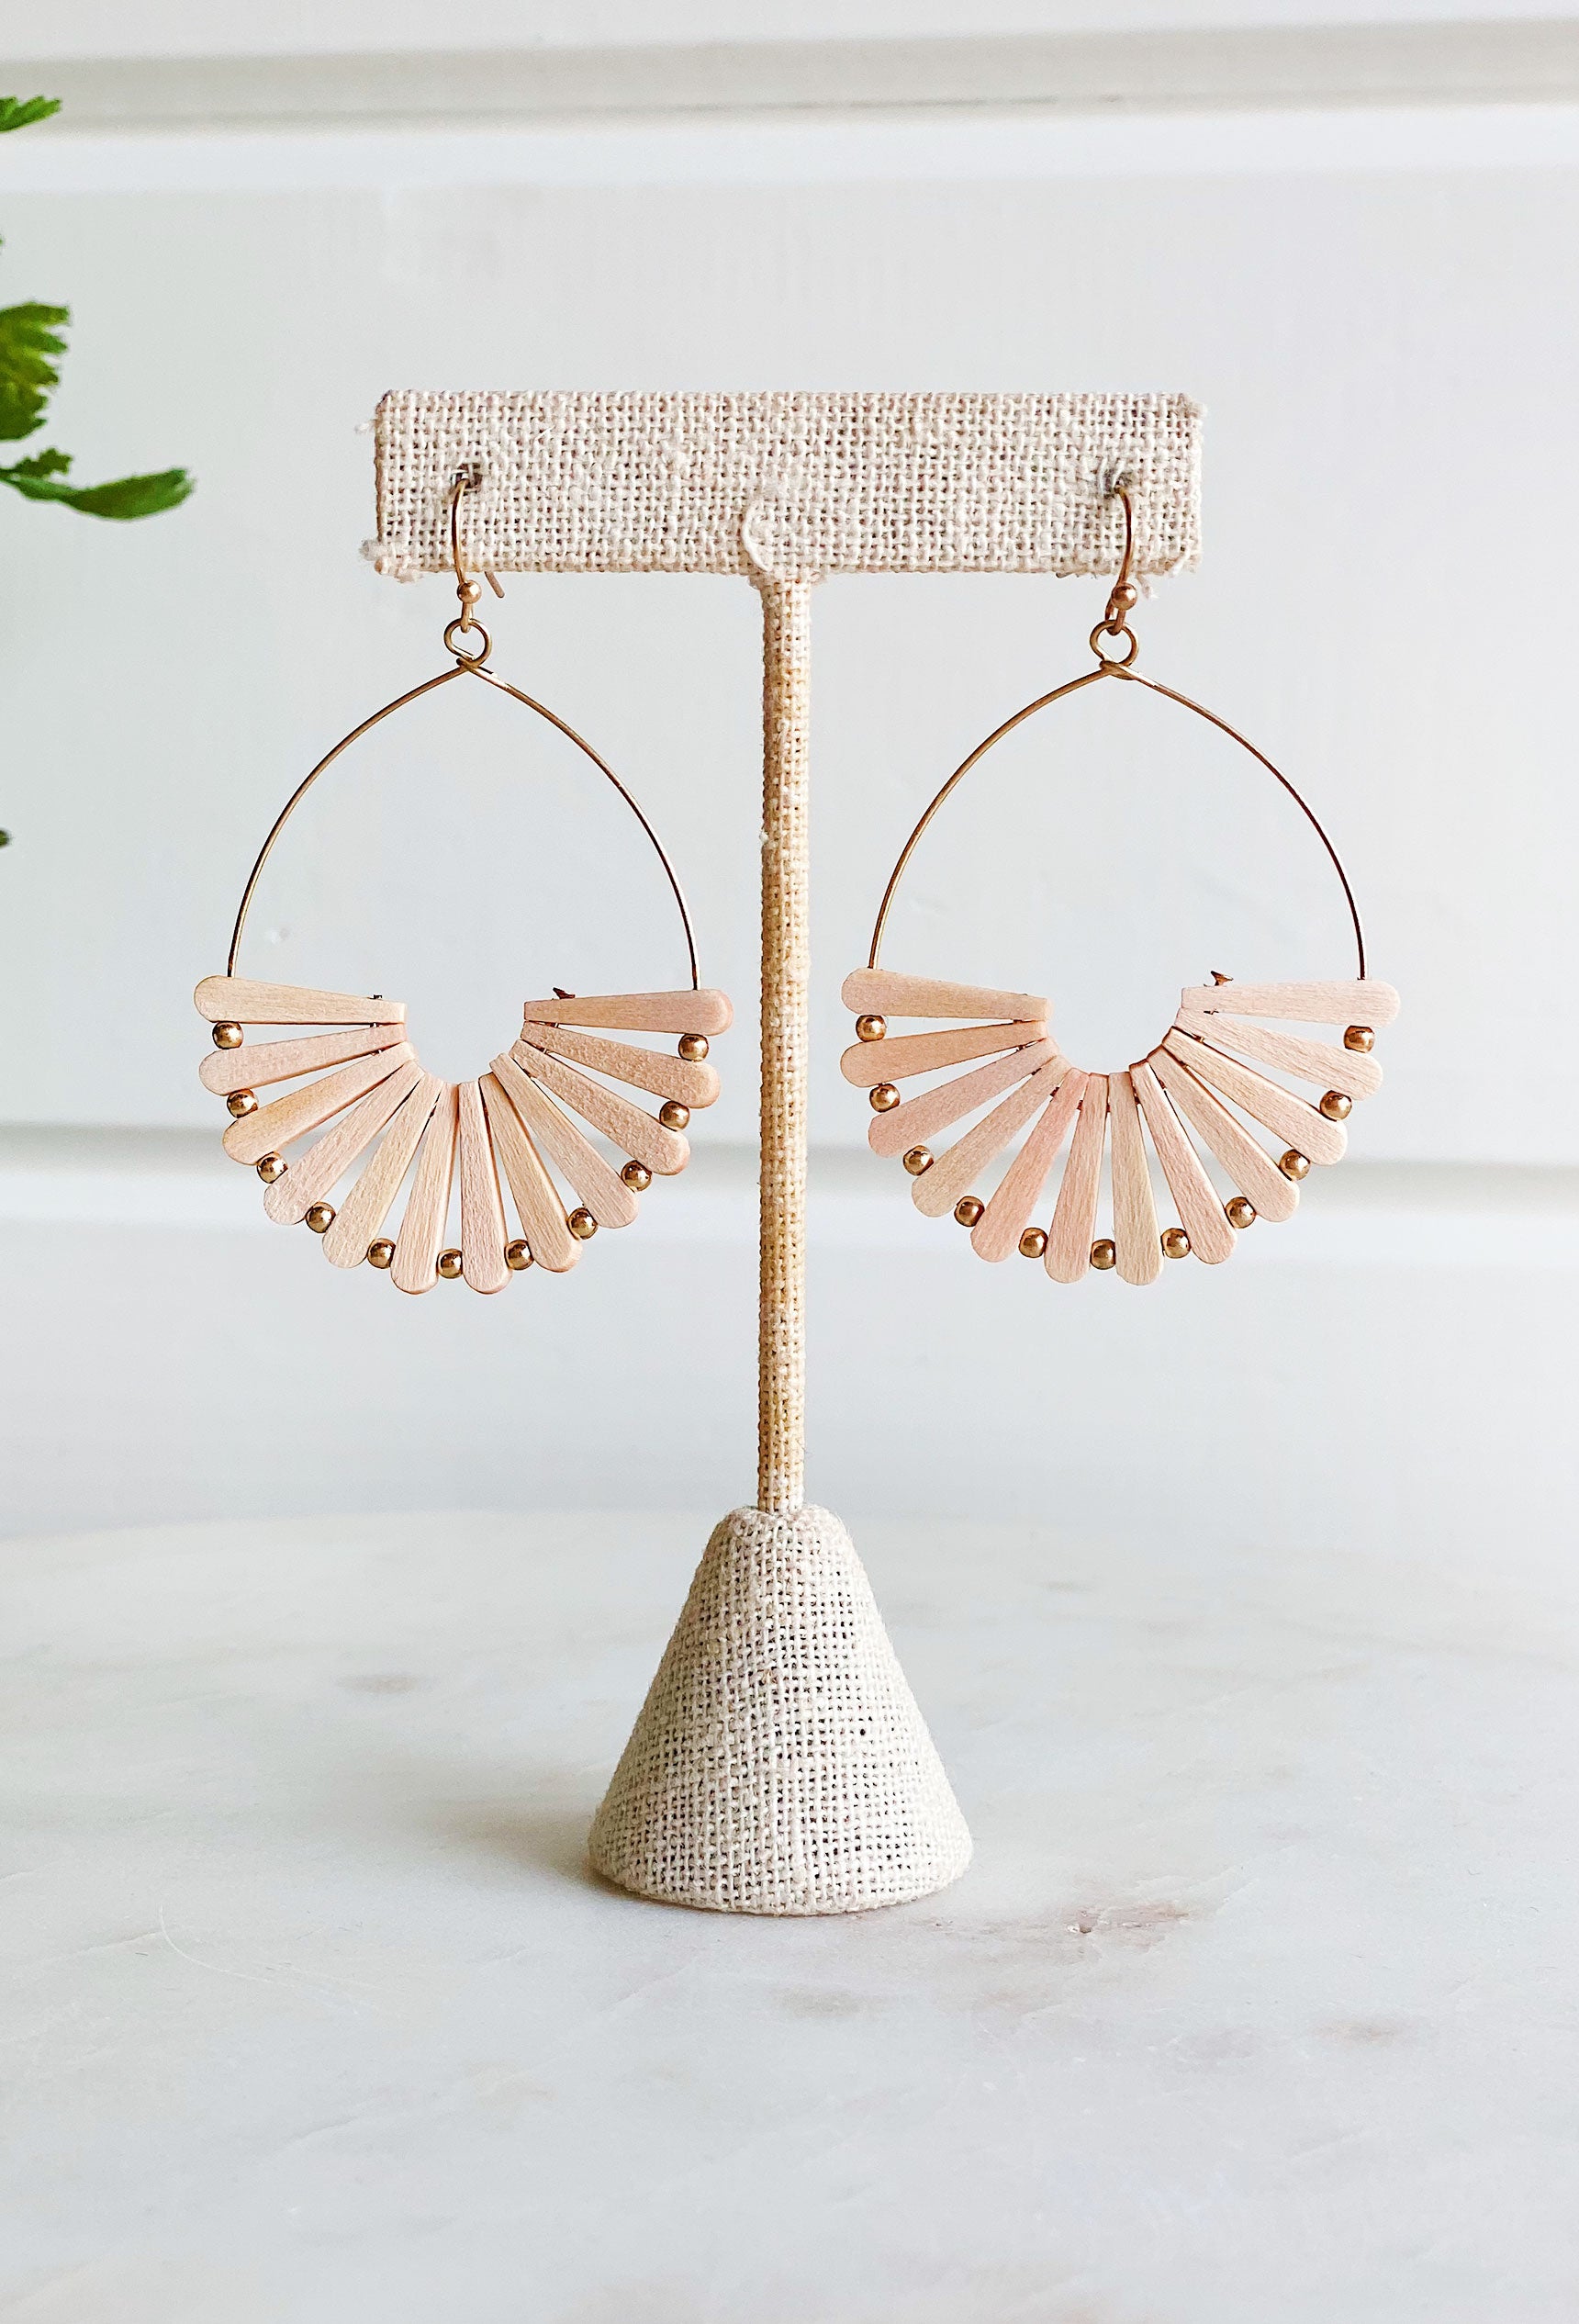 Waiting for you Earrings, gold teardrop earrings are adorned with delicate wooden fan detail